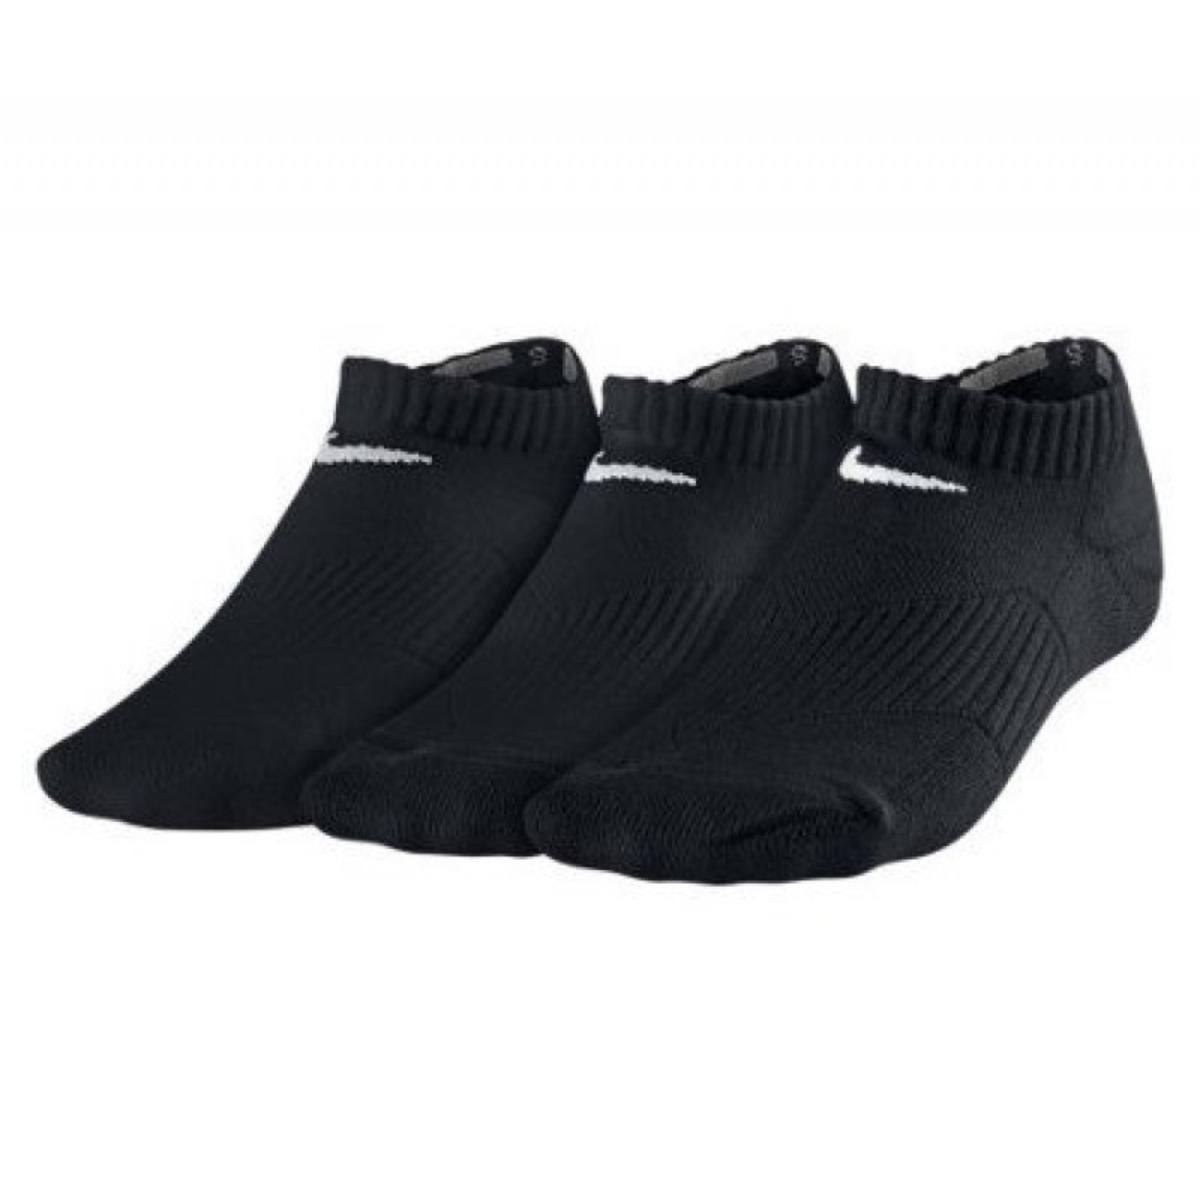 Nike Unisex Performance Cotton Cushioned No Show Socks 3 Pairs Black